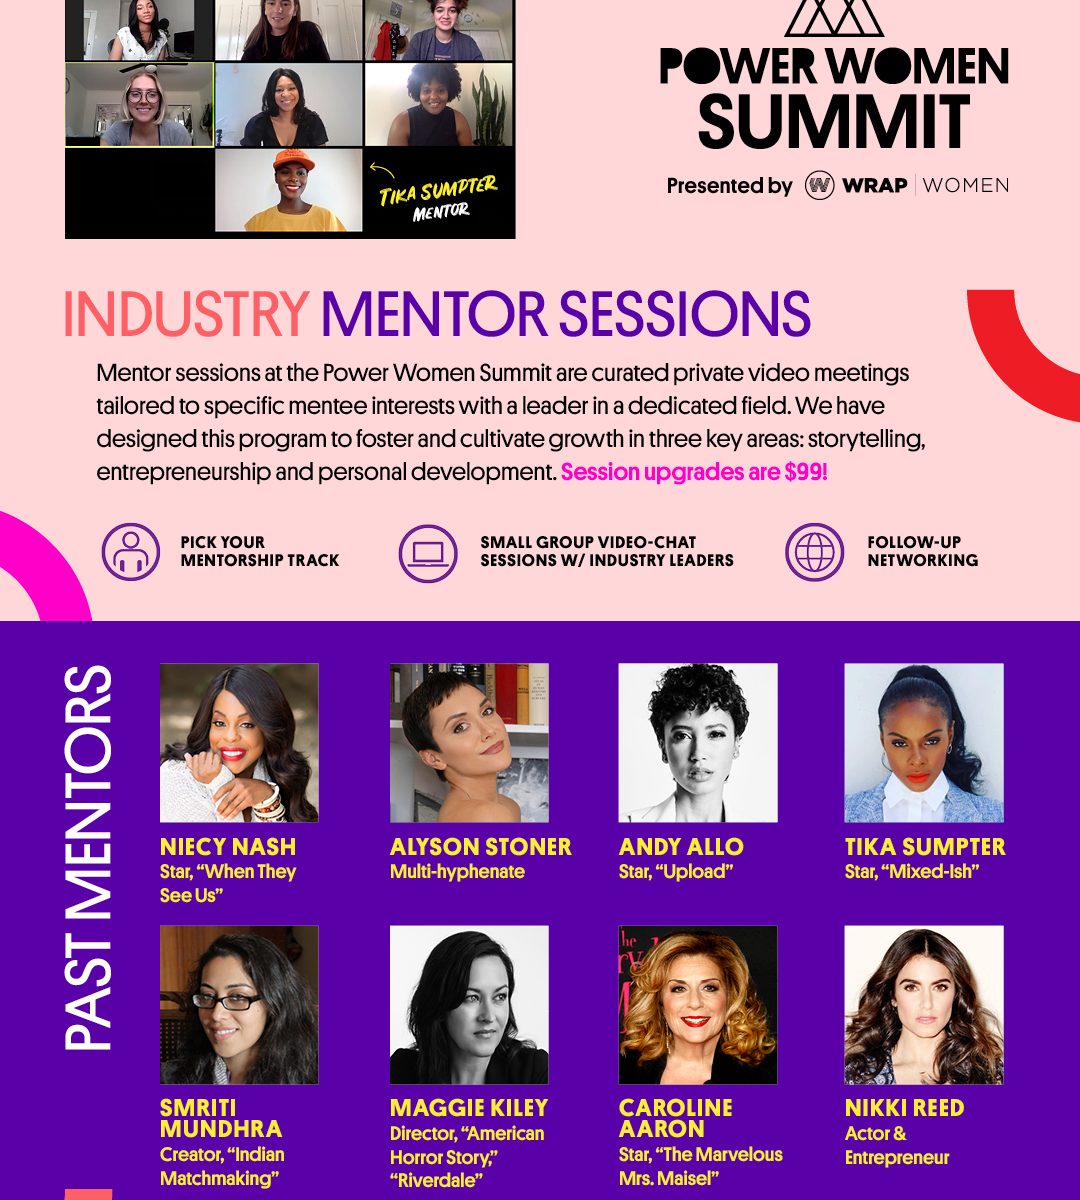 The Wrap's Power Women Summit 2020